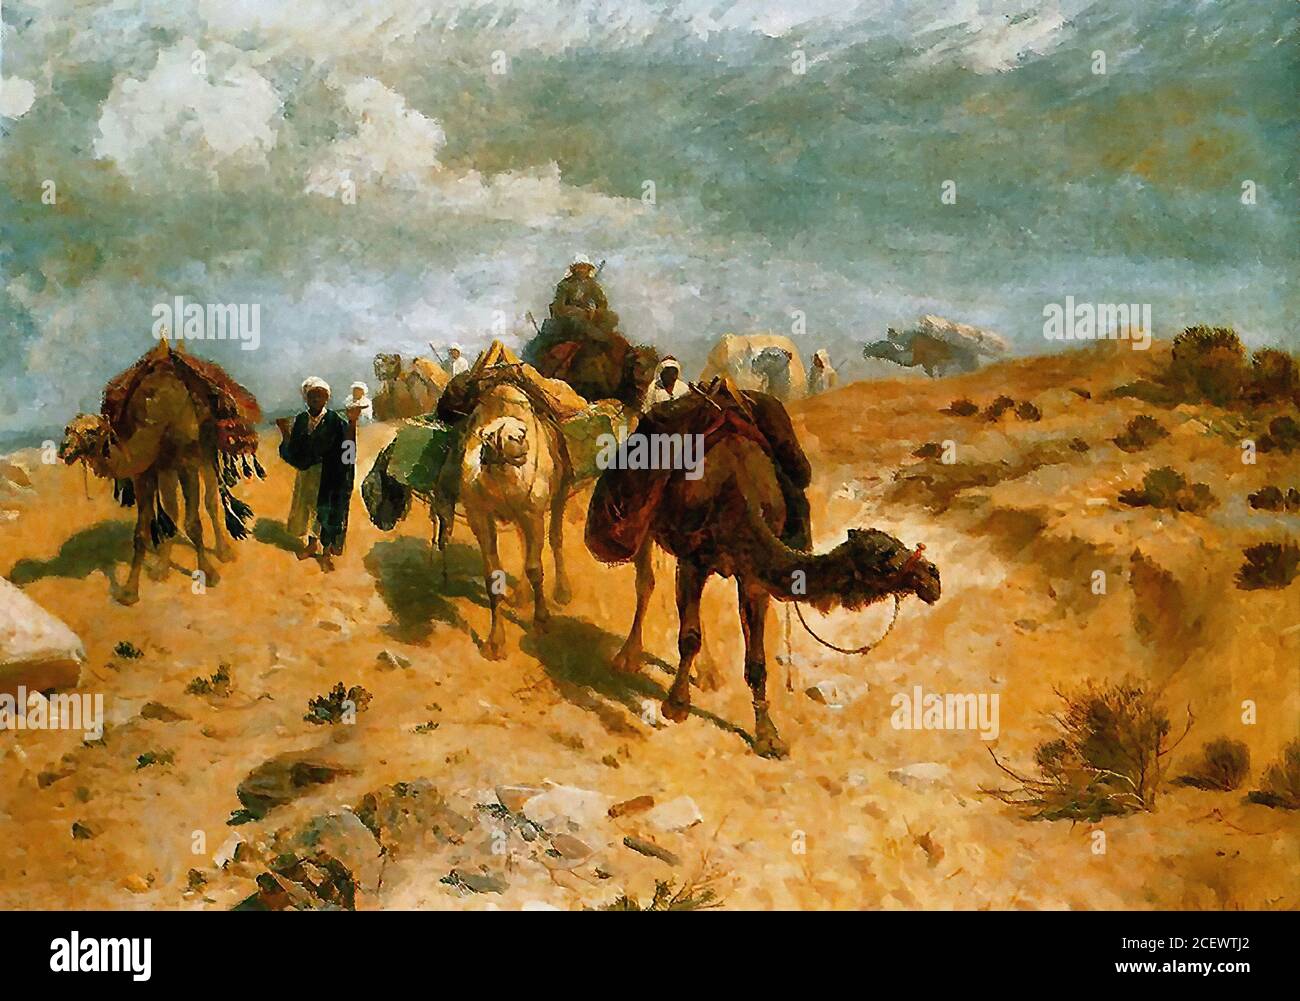 Картина Поленова Караван в Аравийской пустыне